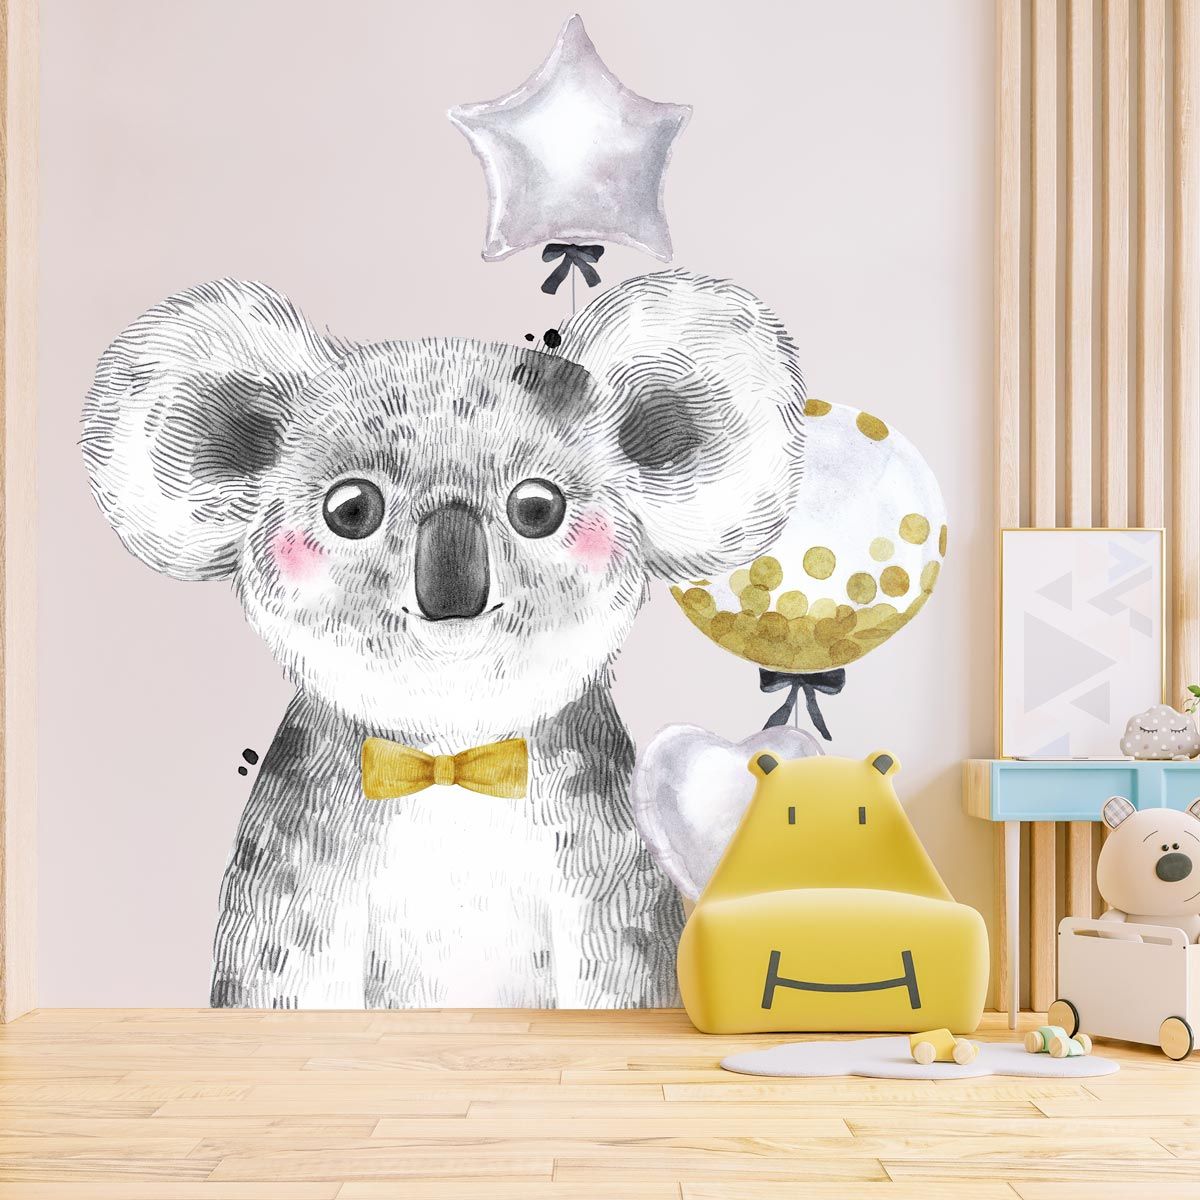 papier-peint-koala-chambre-enfant